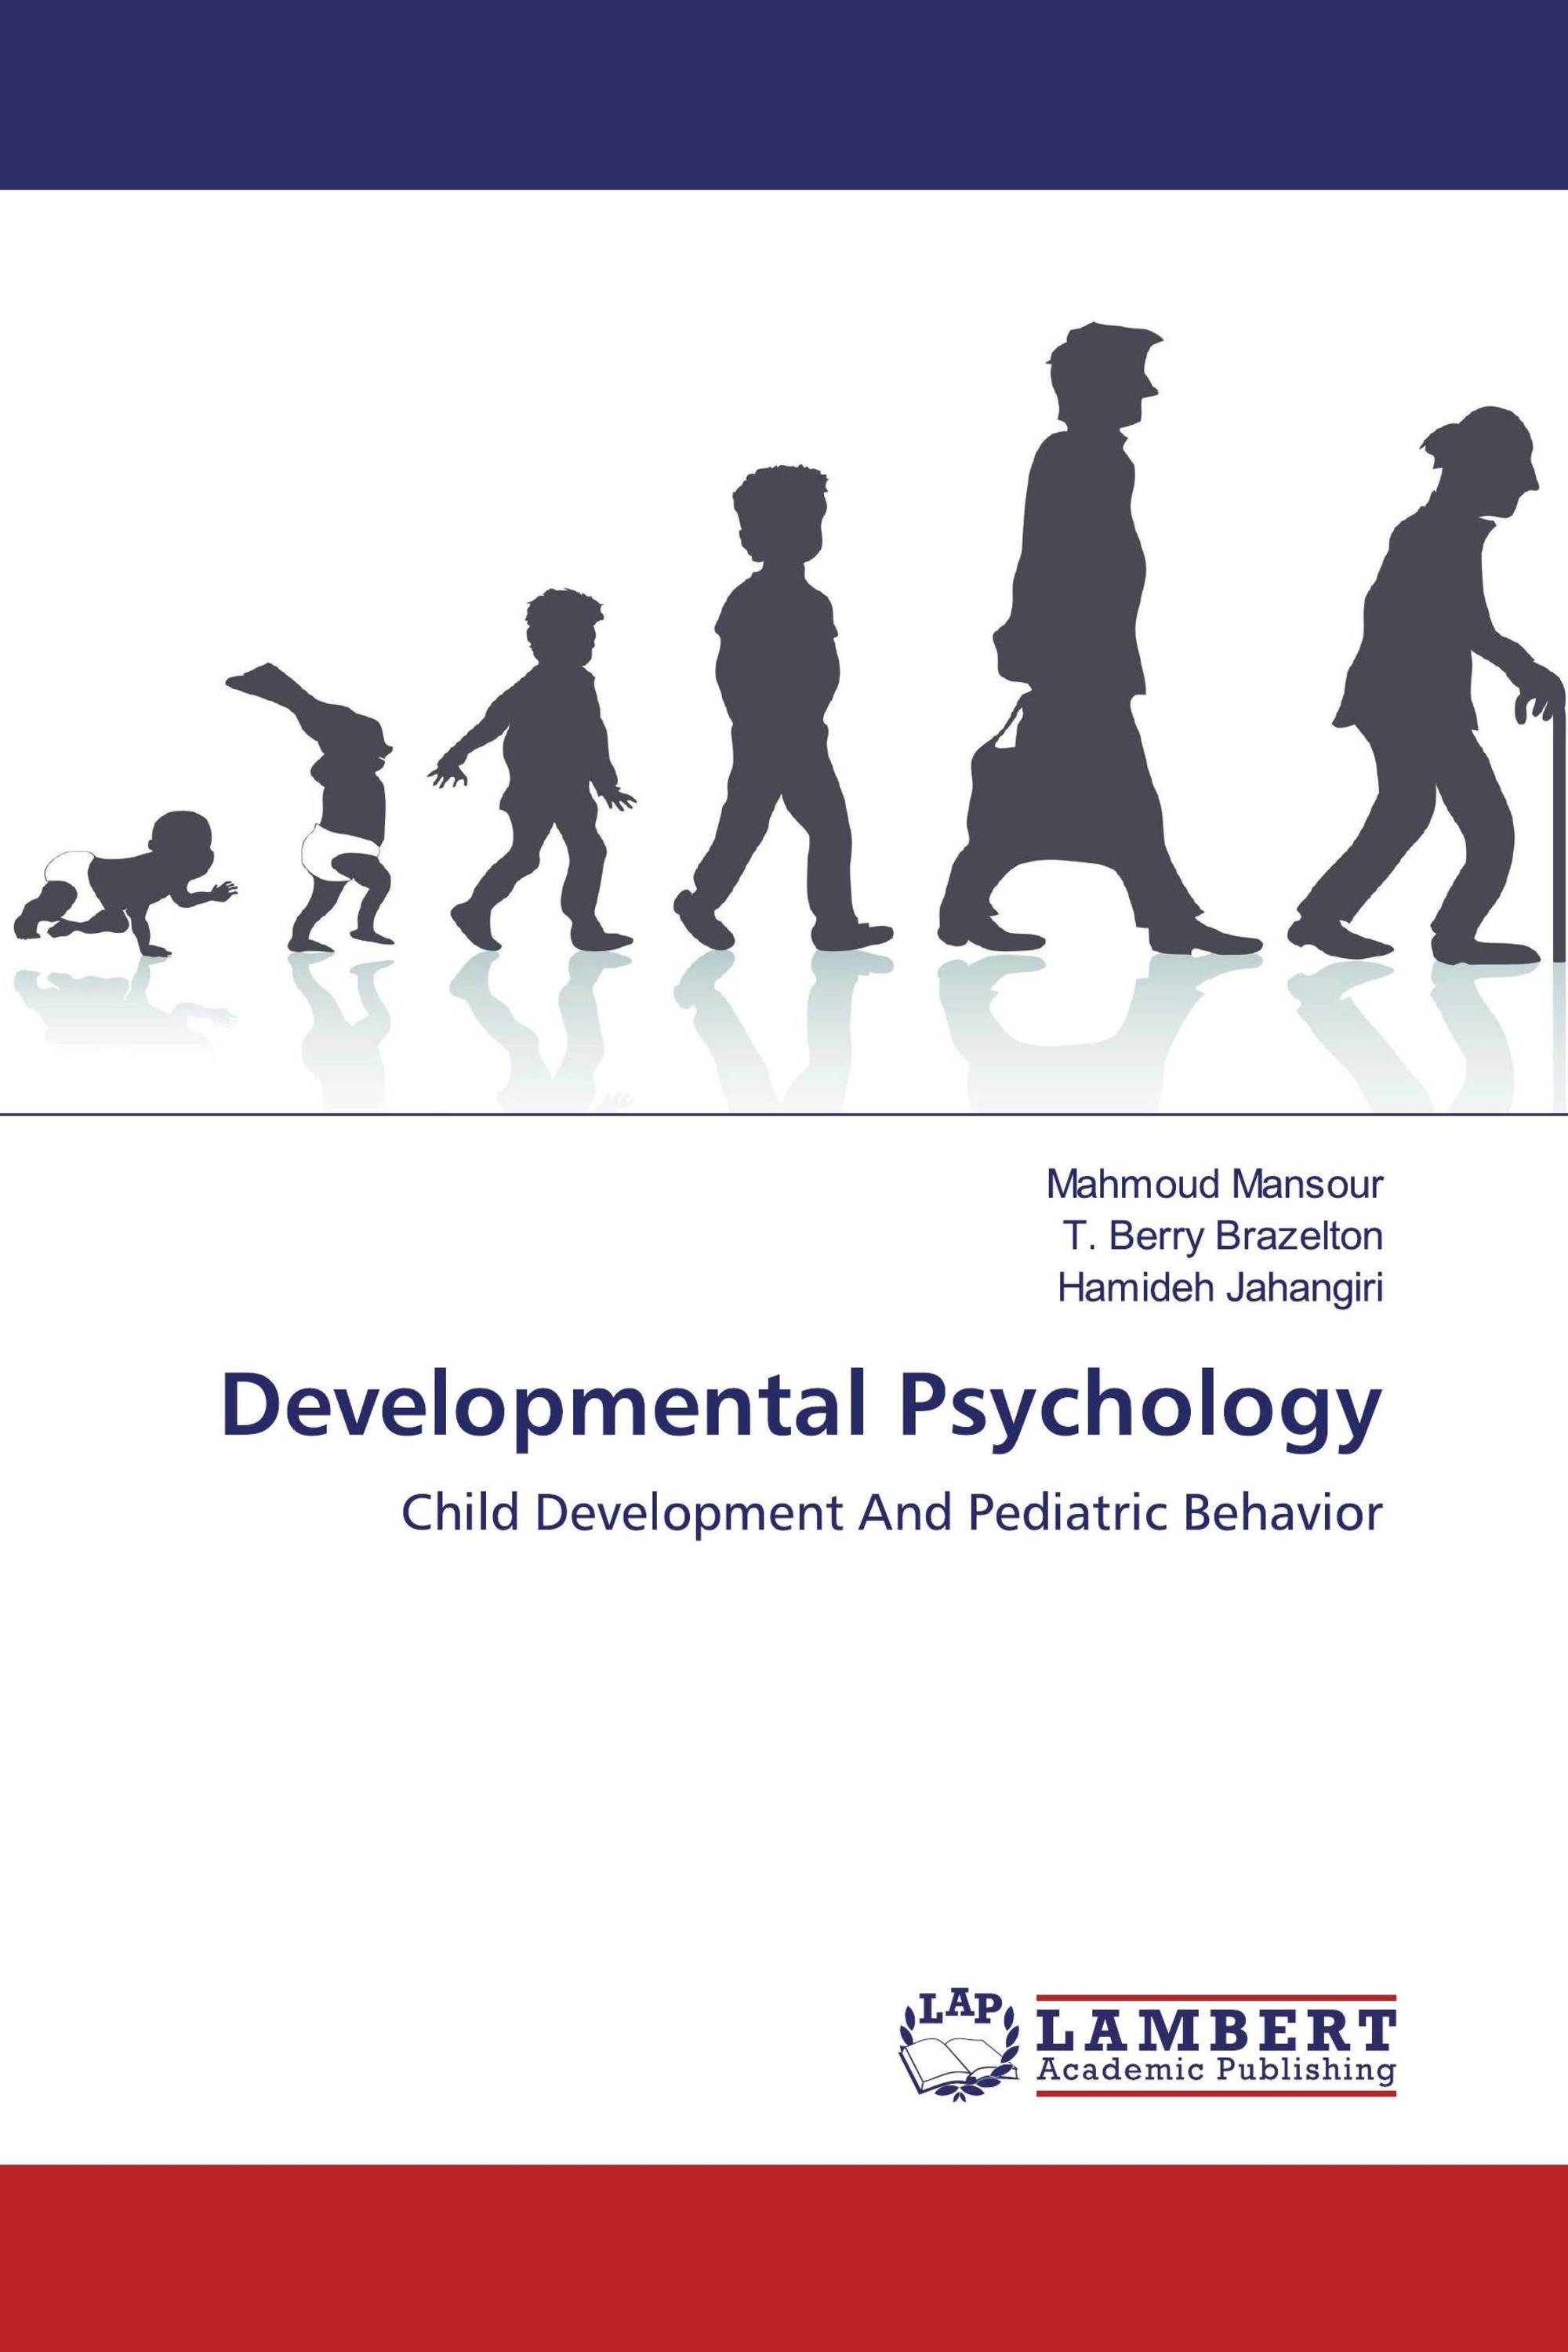 dissertation developmental psychology